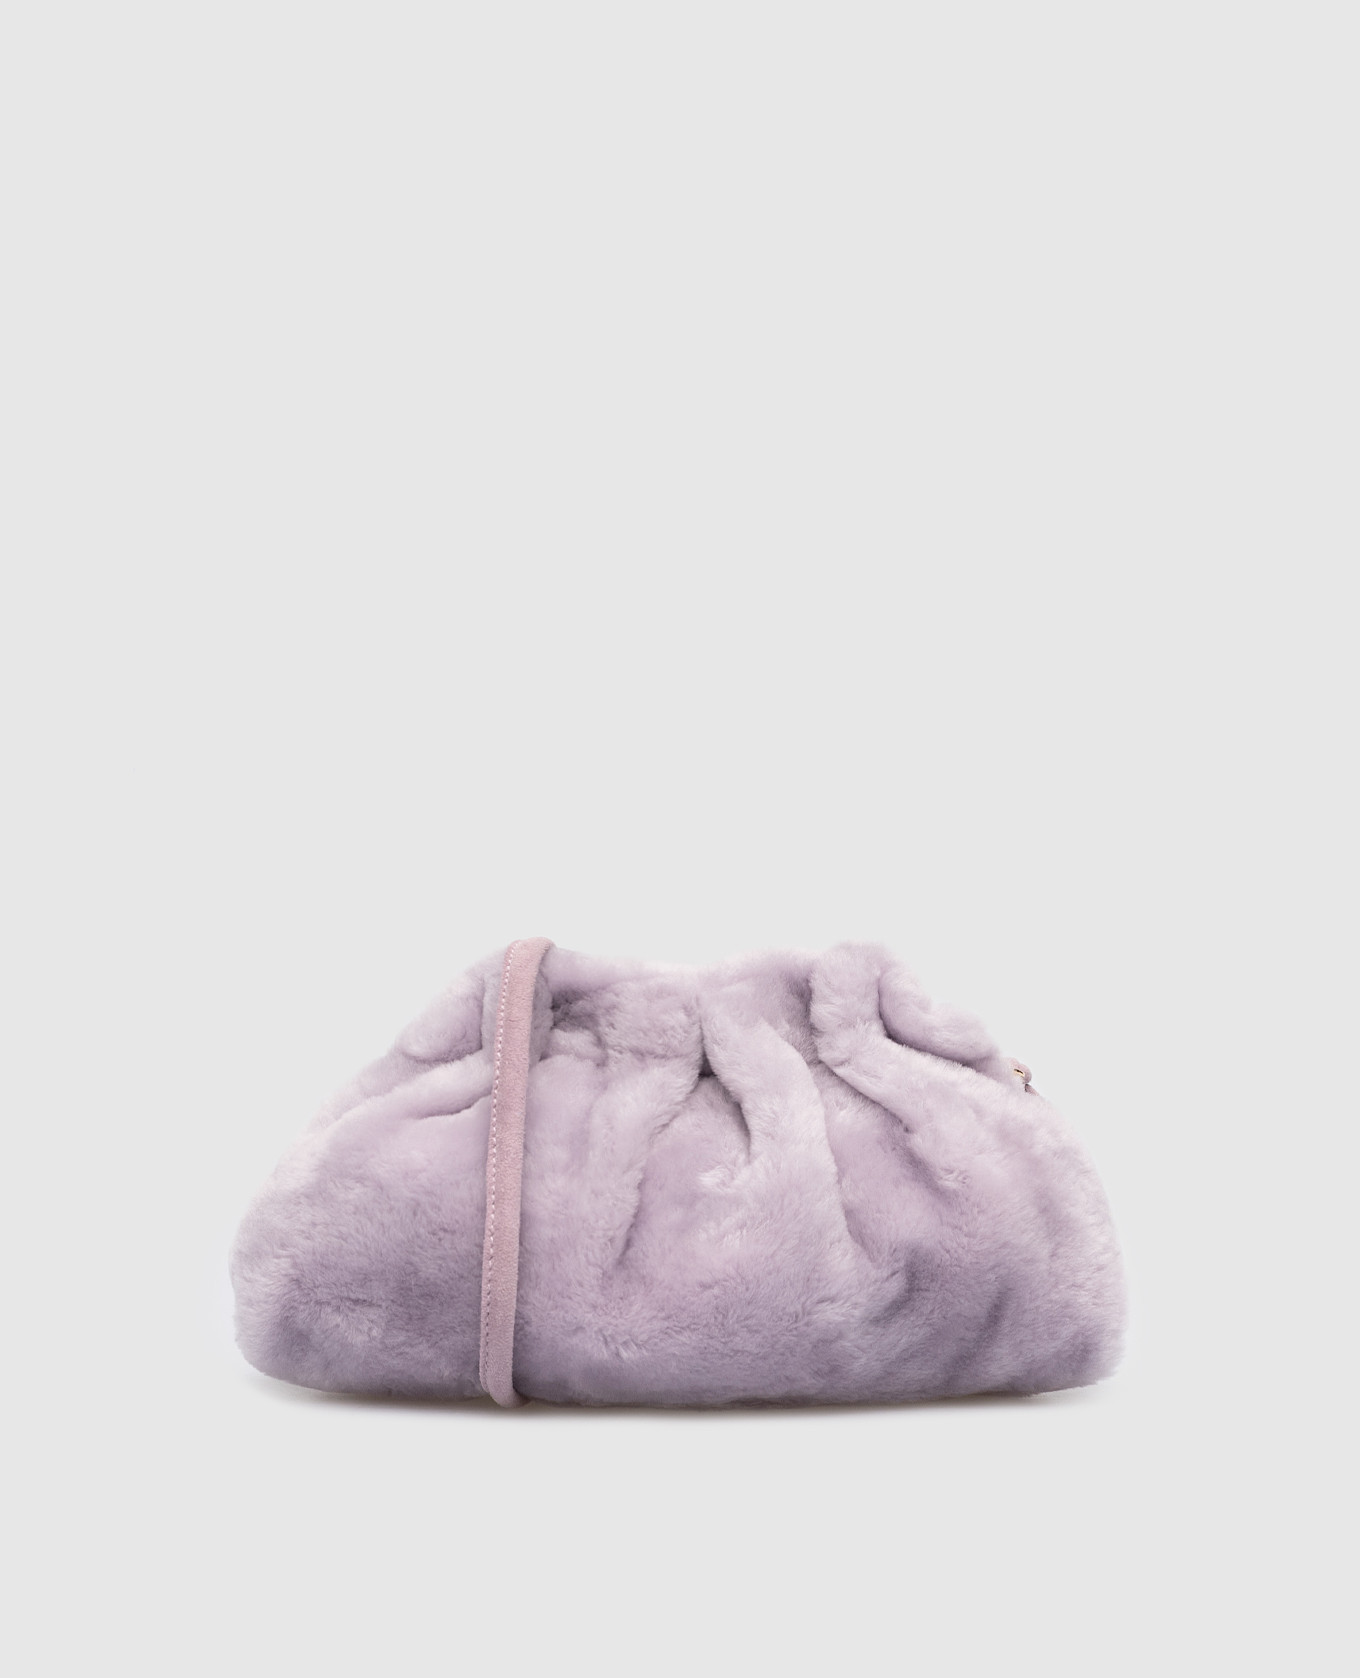 Purple purse-case made of sheepskin